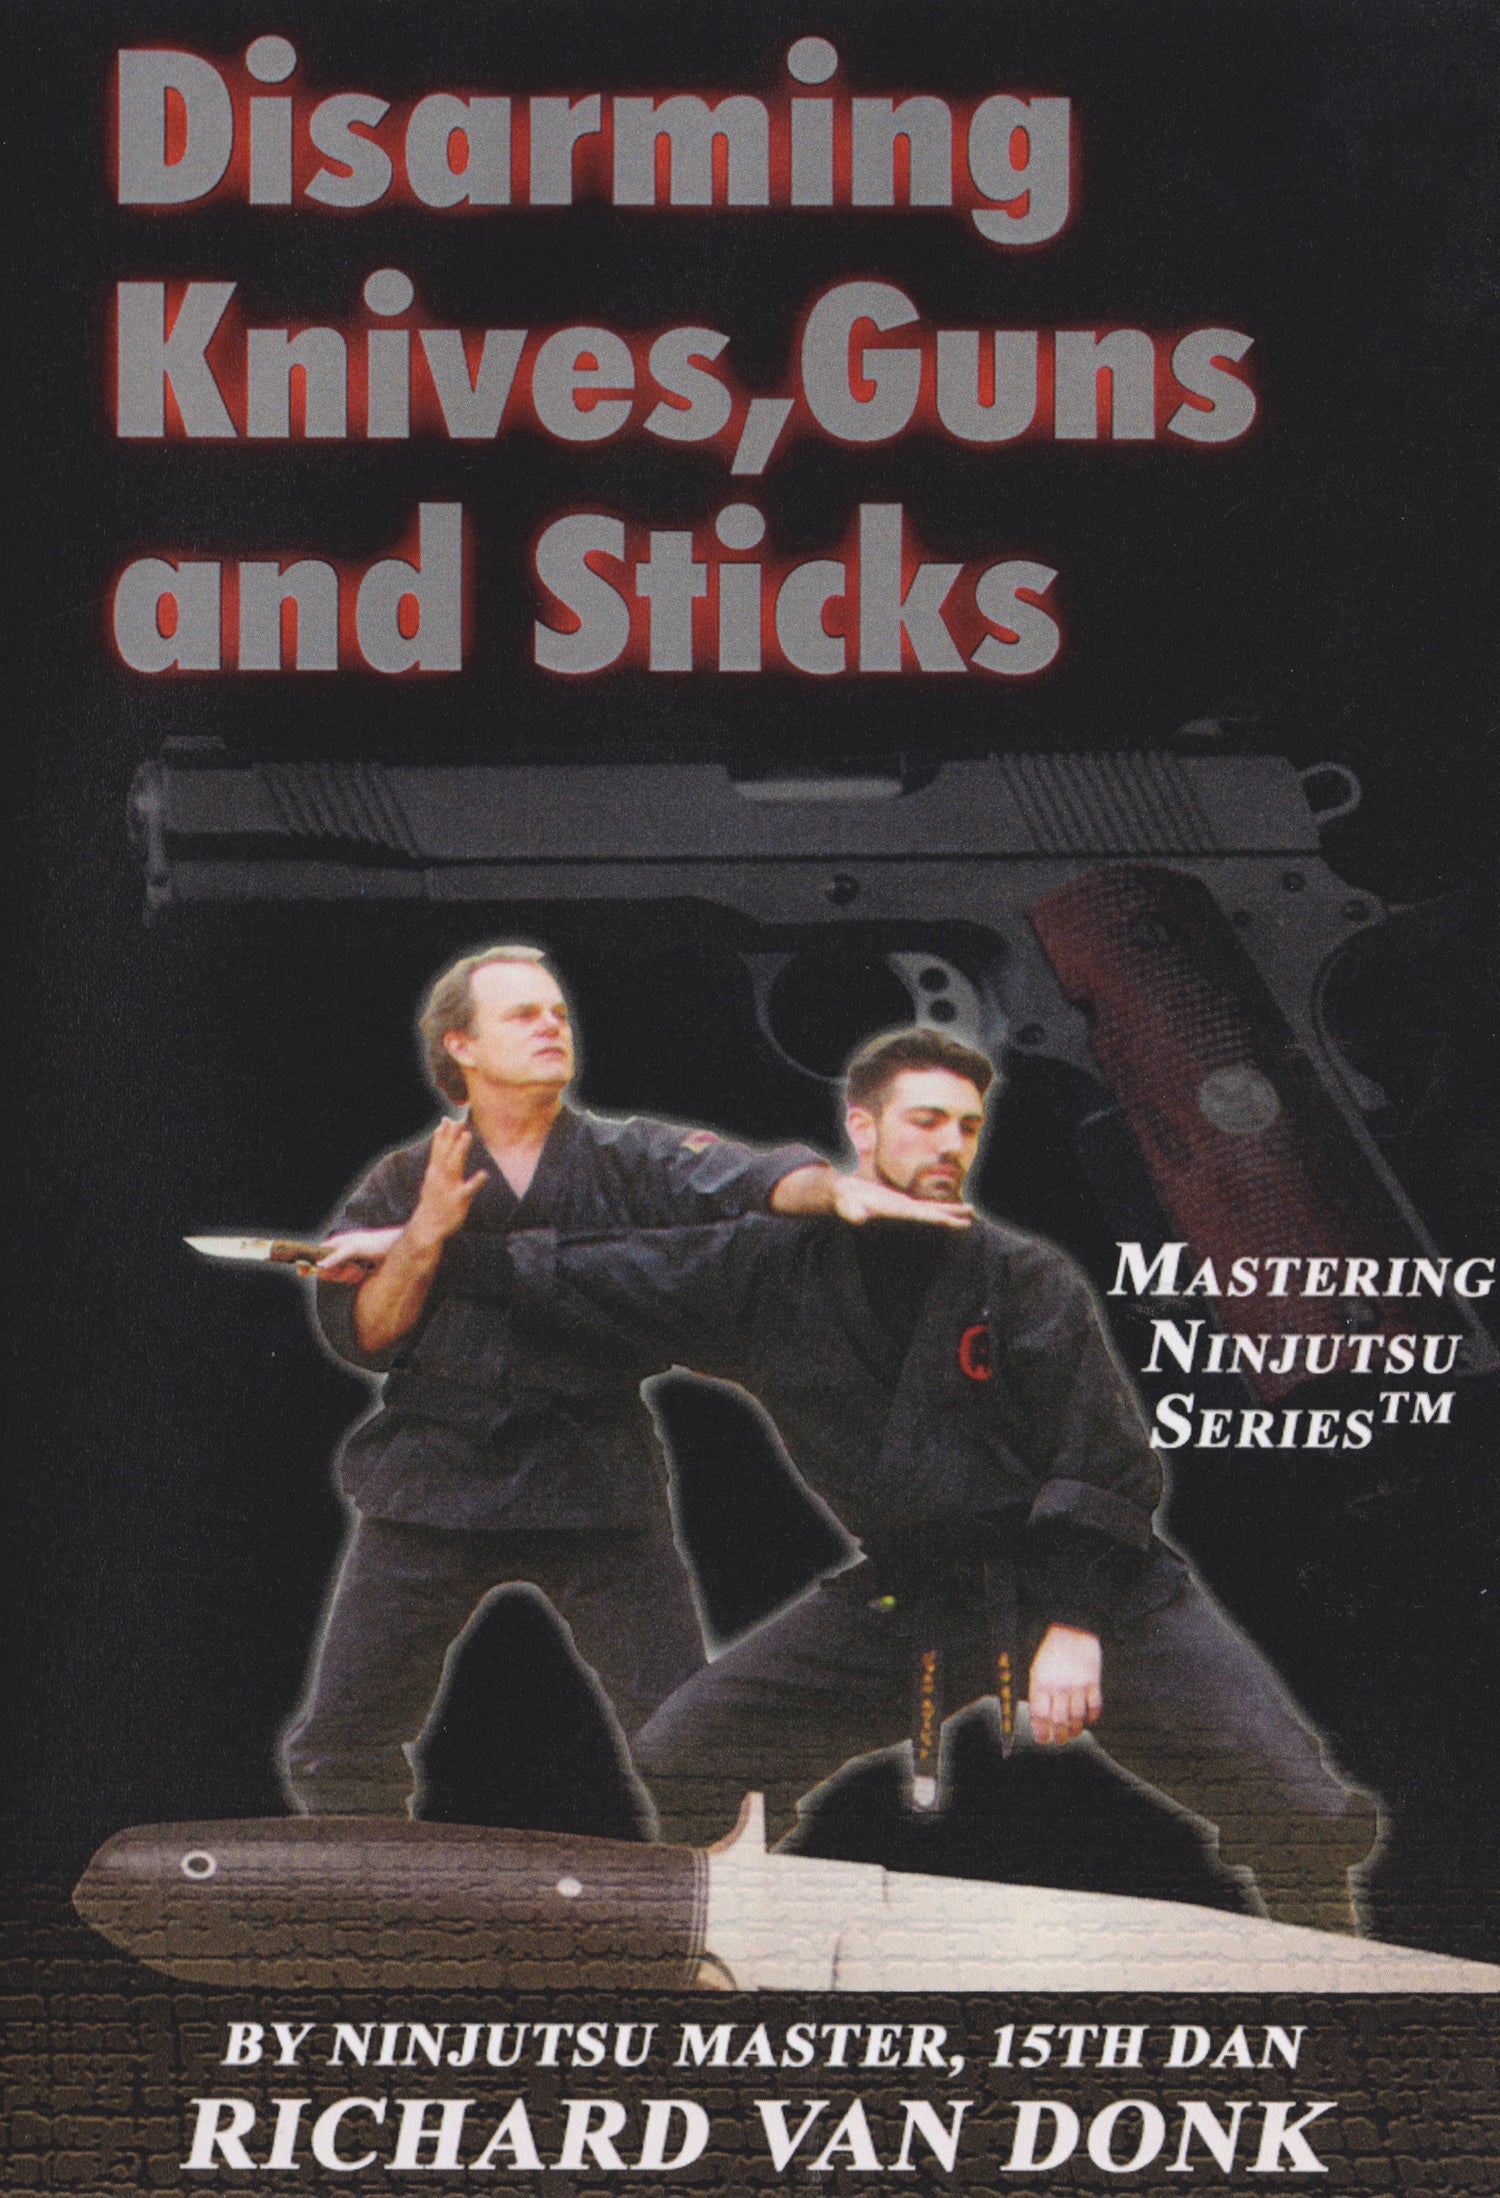 Disarming Guns, Knives & Sticks DVD by Richard Van Donk